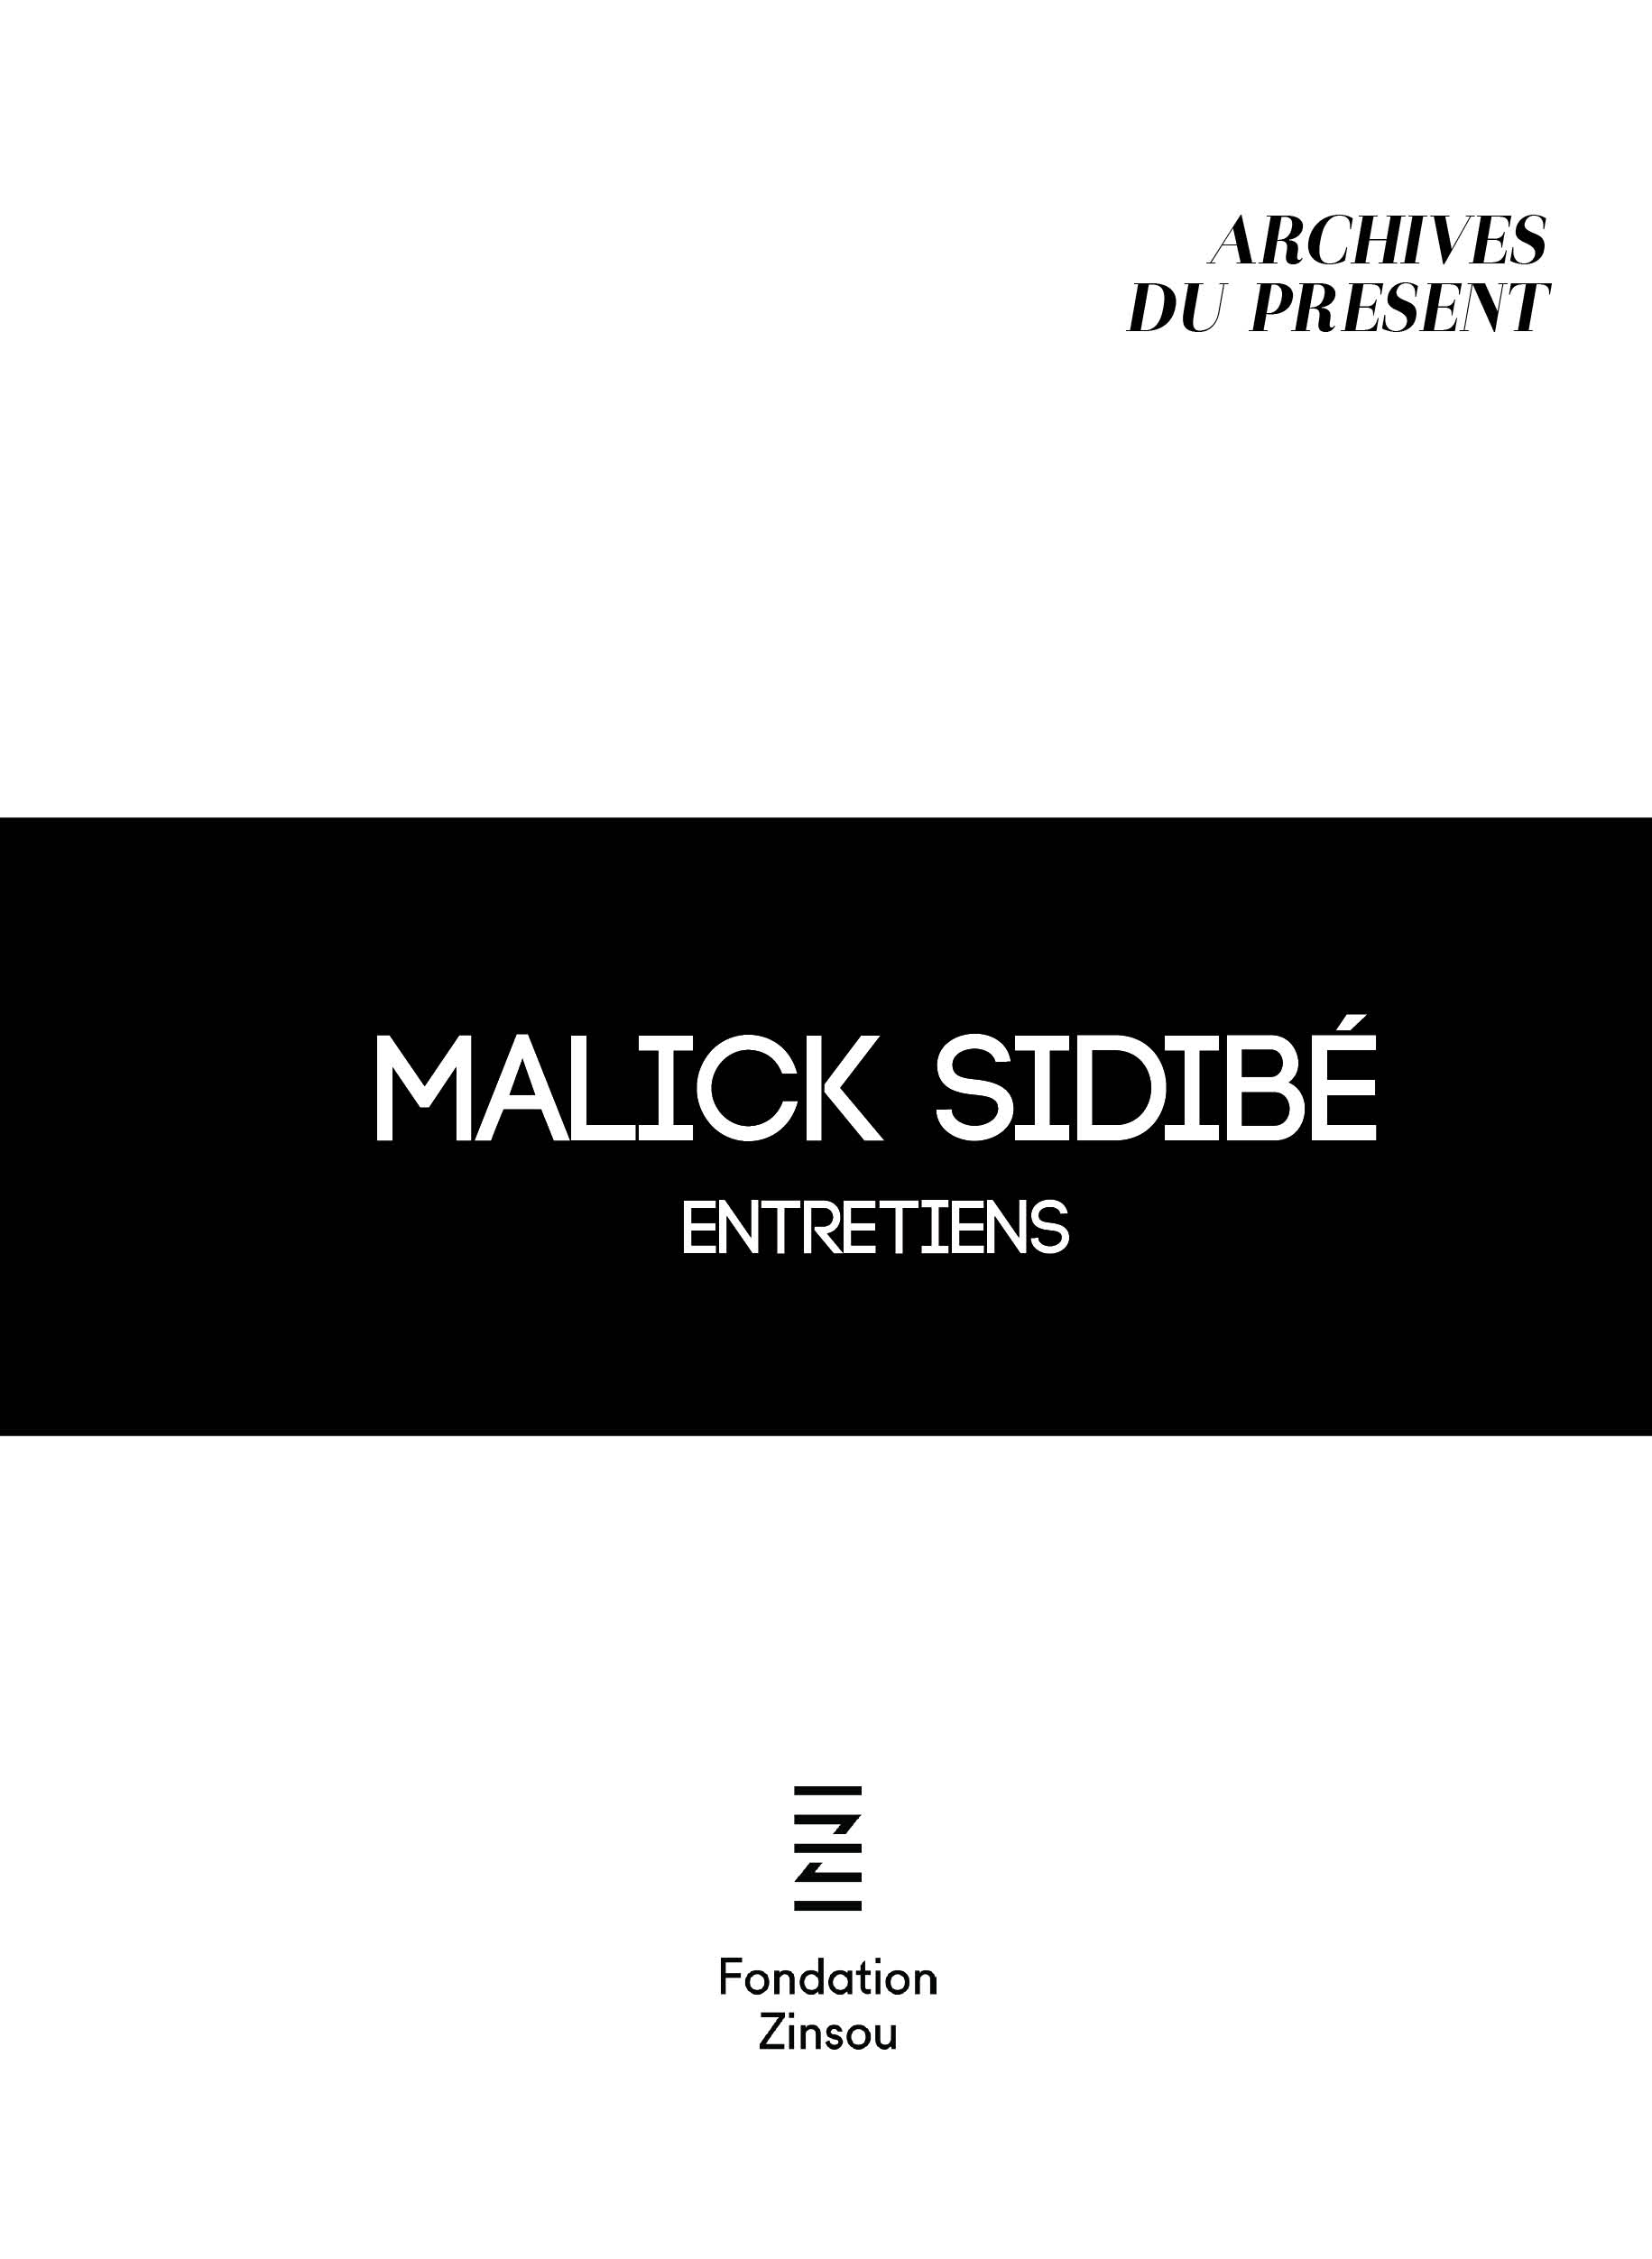 Archives du Présent-Malick Sidibé © Fondation Zinsou